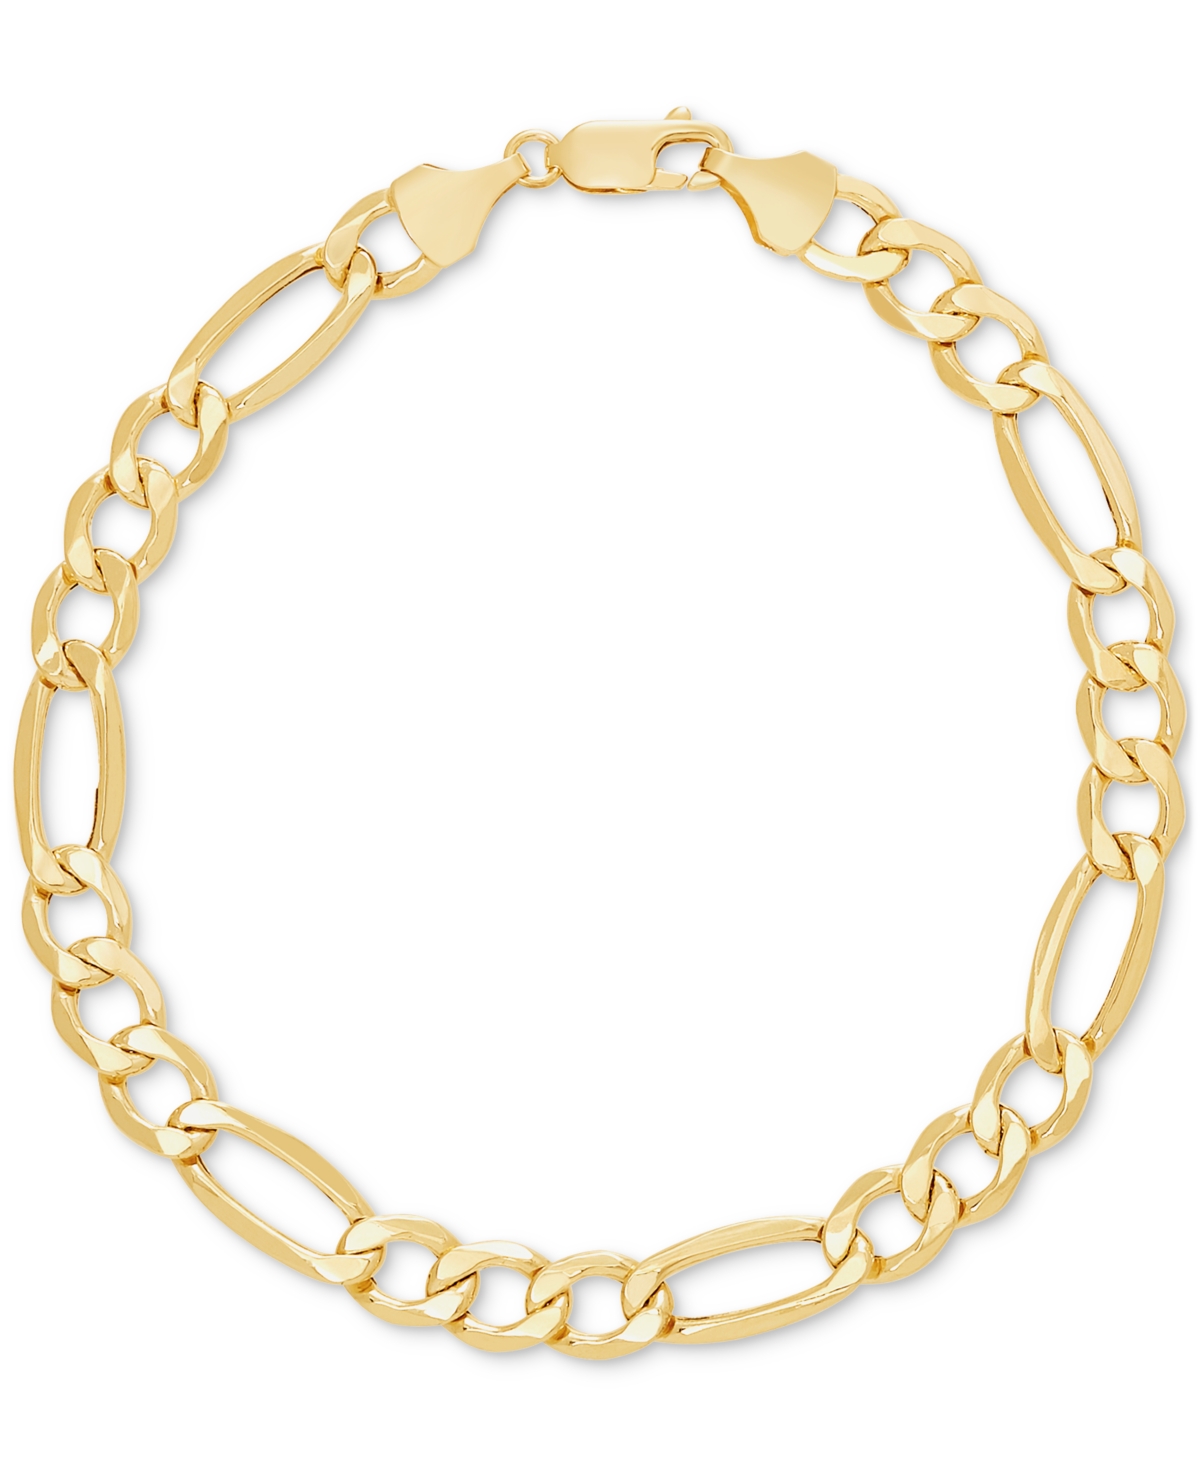 Men's Figaro Chain Bracelet in 10k Gold - Yellow Gold